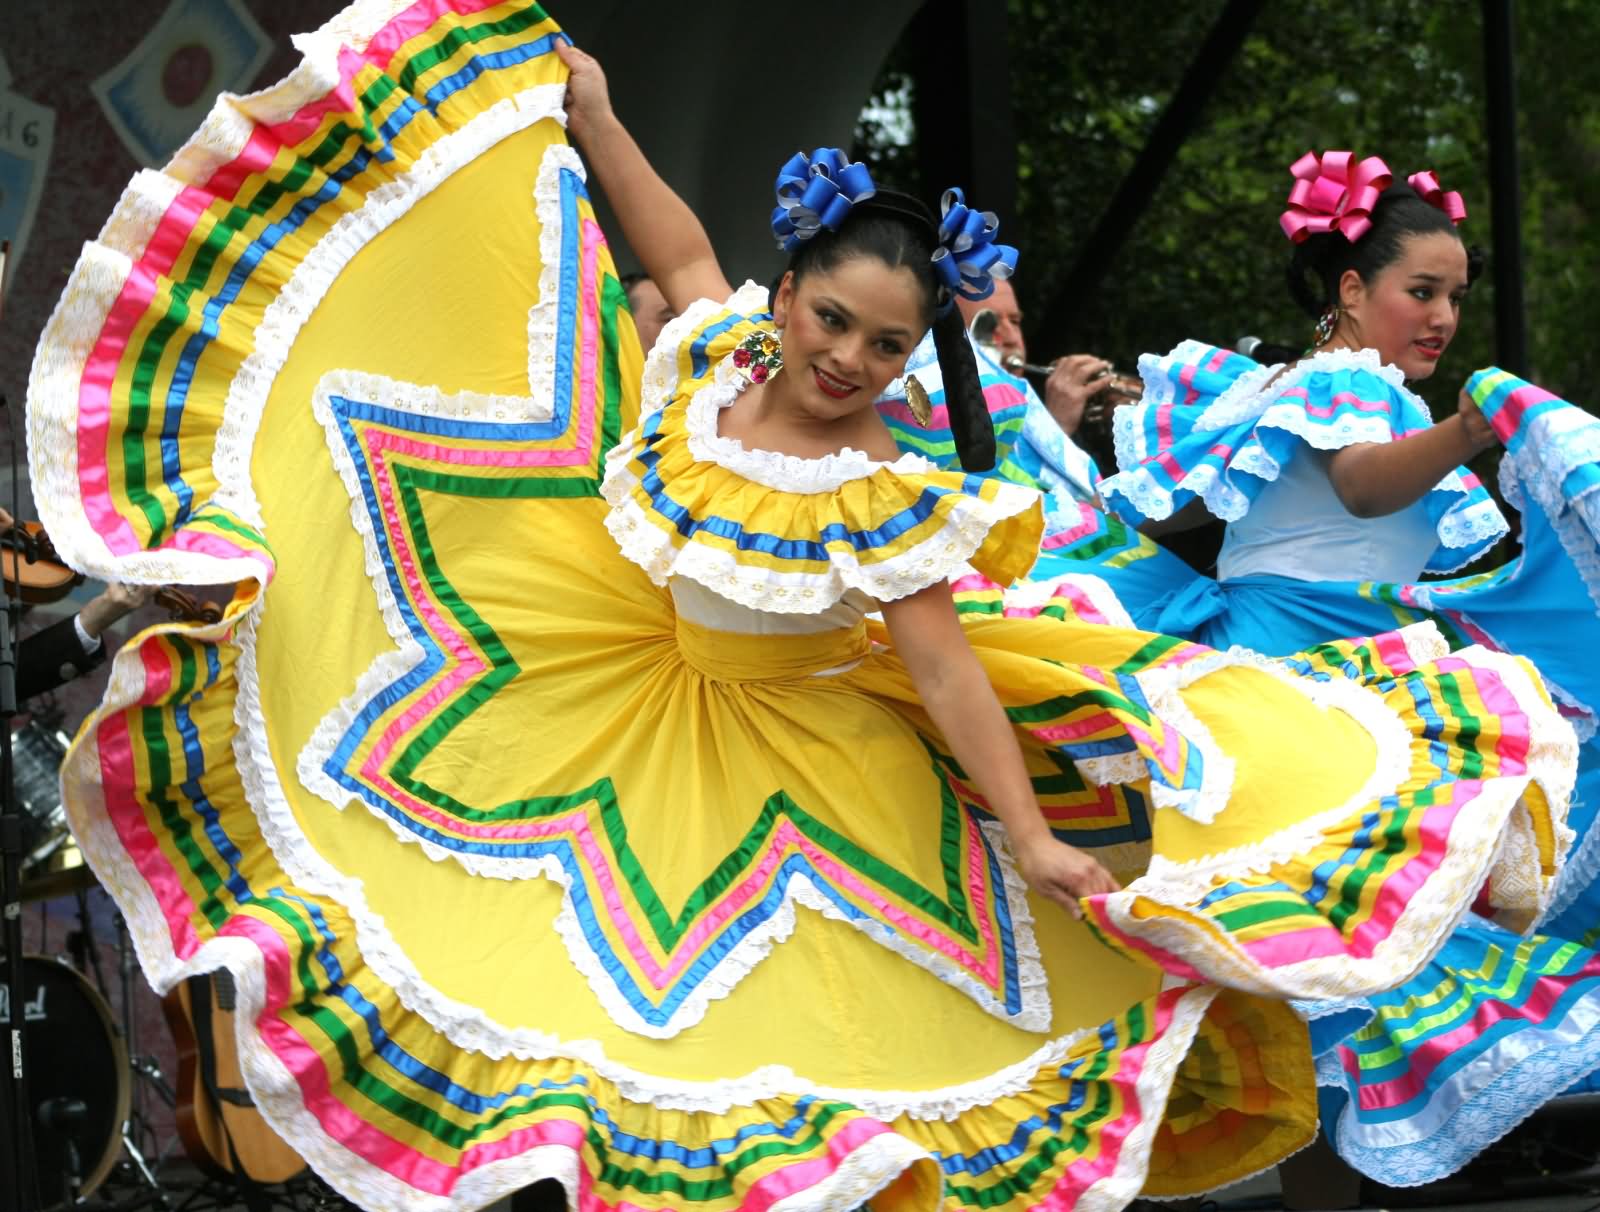 Beautiful Mexican Girl Dancing And Celebrating Cinco de Mayo